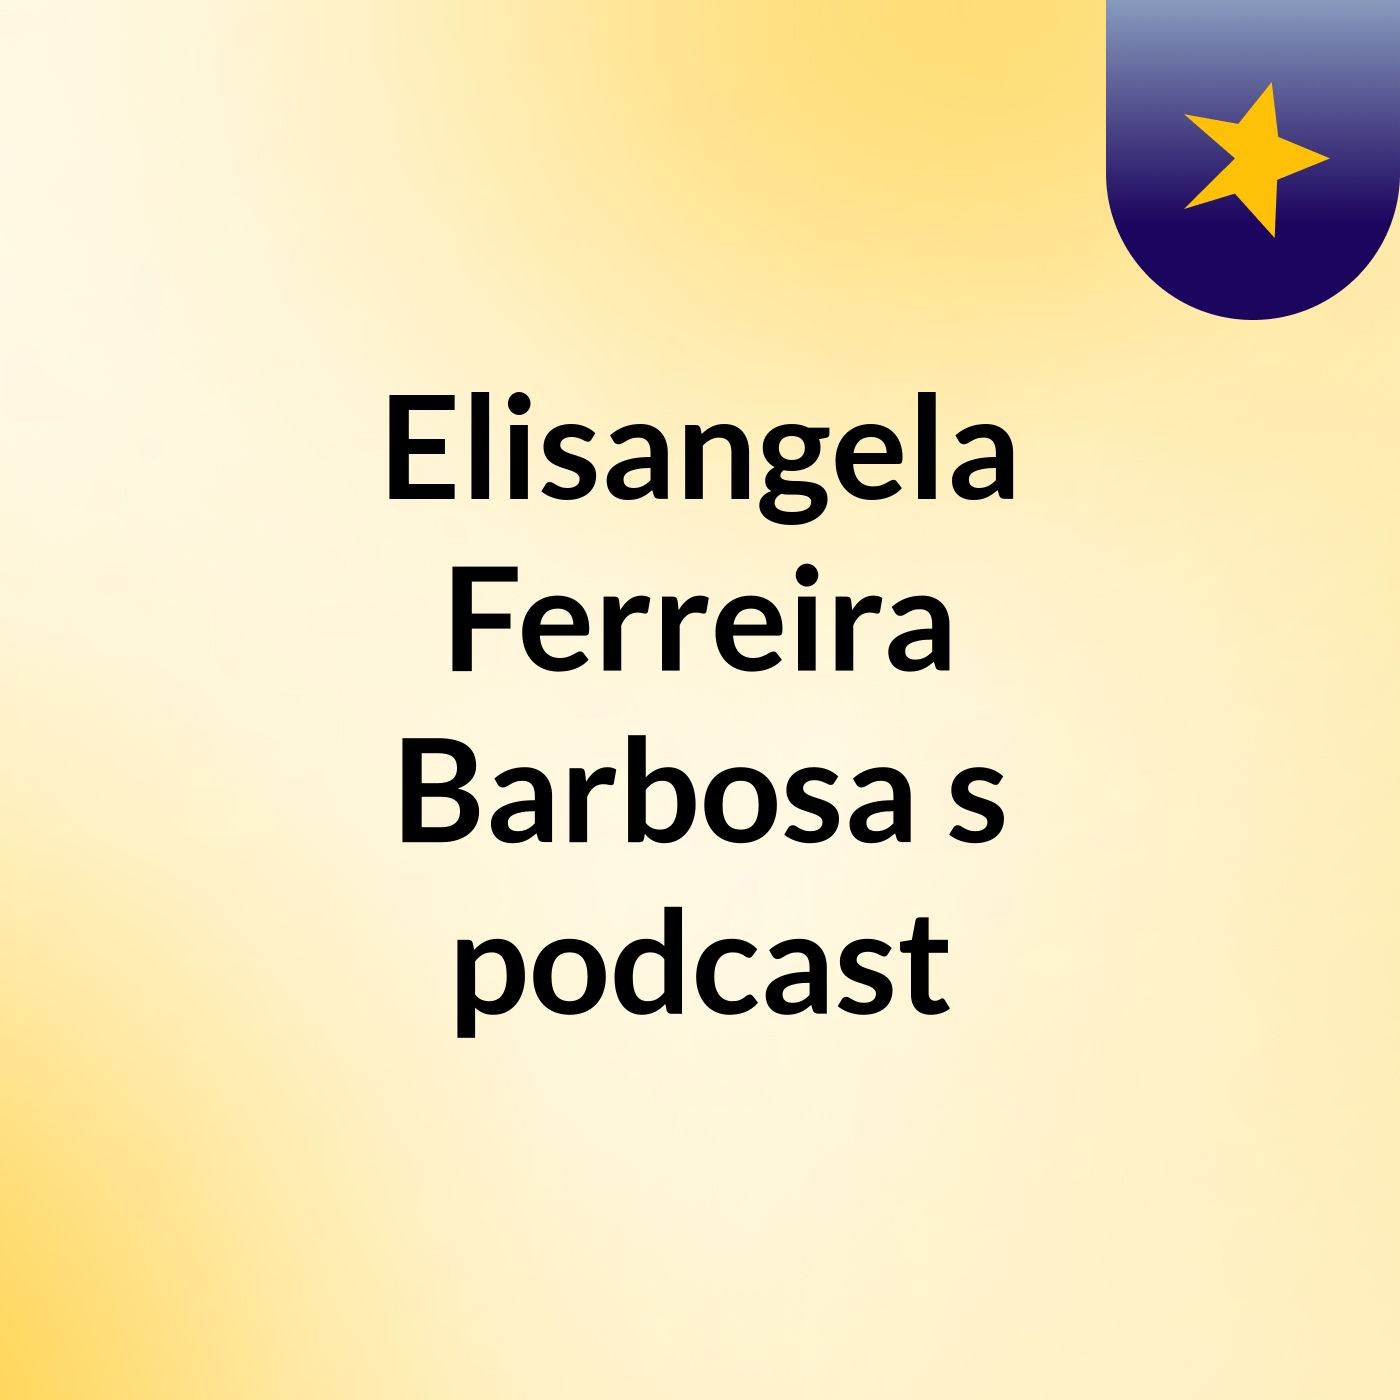 Elisangela Ferreira Barbosa's podcast